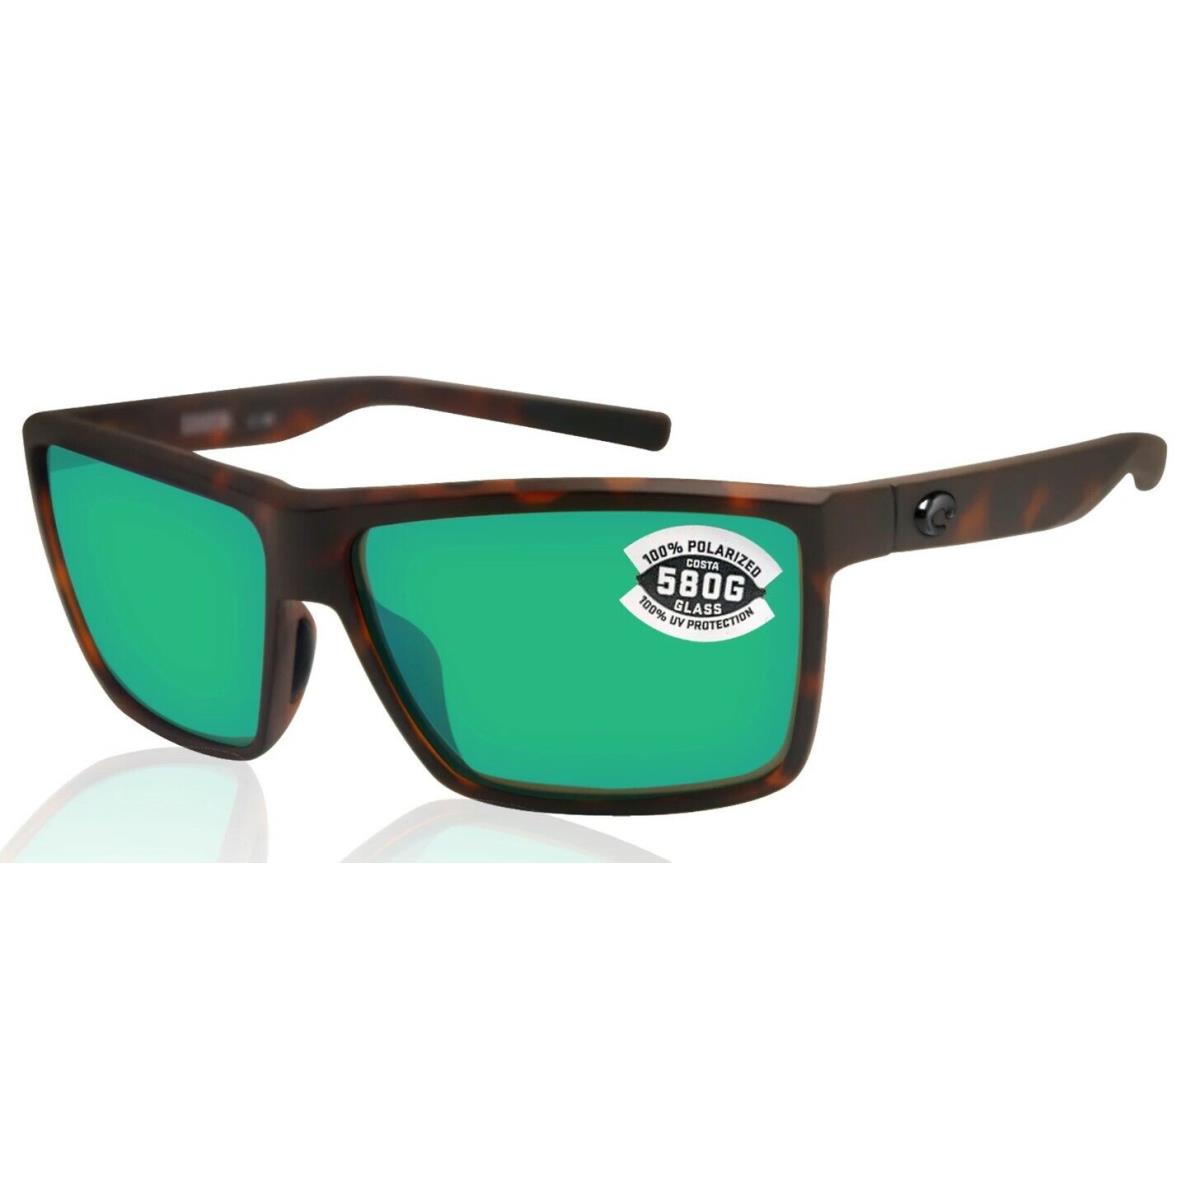 Costa Del Mar Rinconcito Tortoise Polarized Green Sunglasses 06S9016 901622 60 - Brown Frame, Green Lens